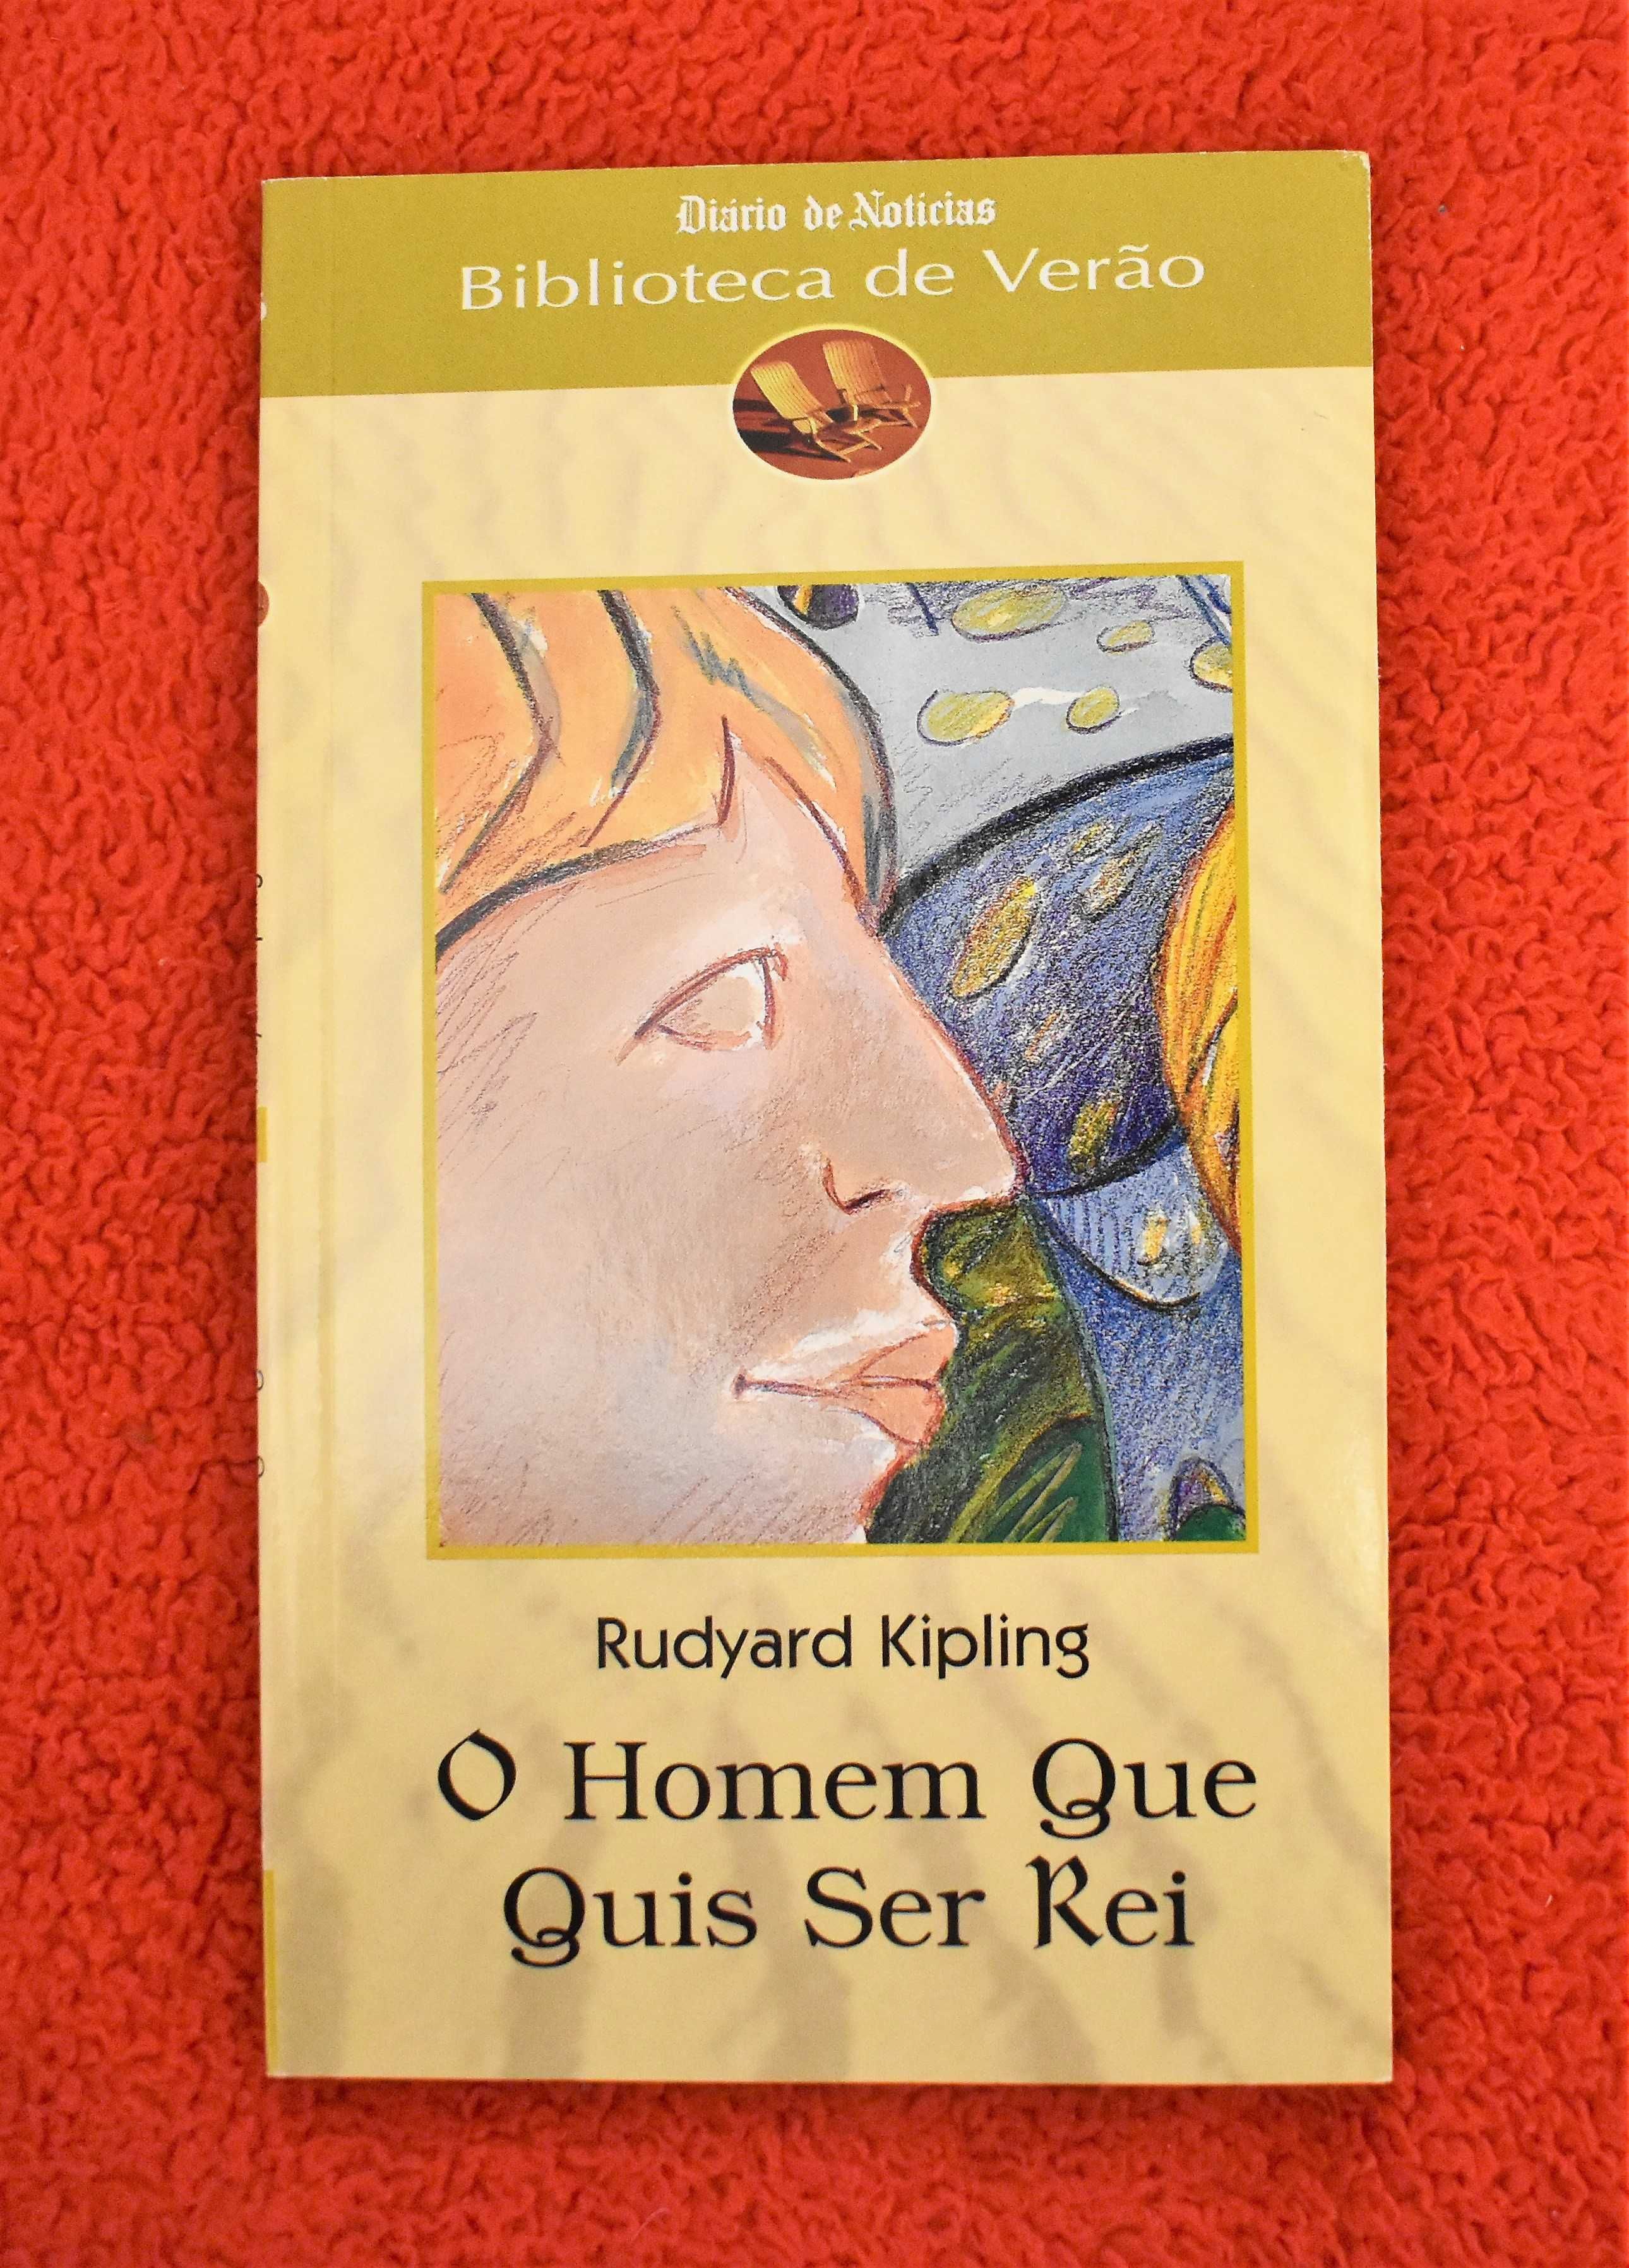 Rudyard Kipling - O Homem Que Quis Ser Rei